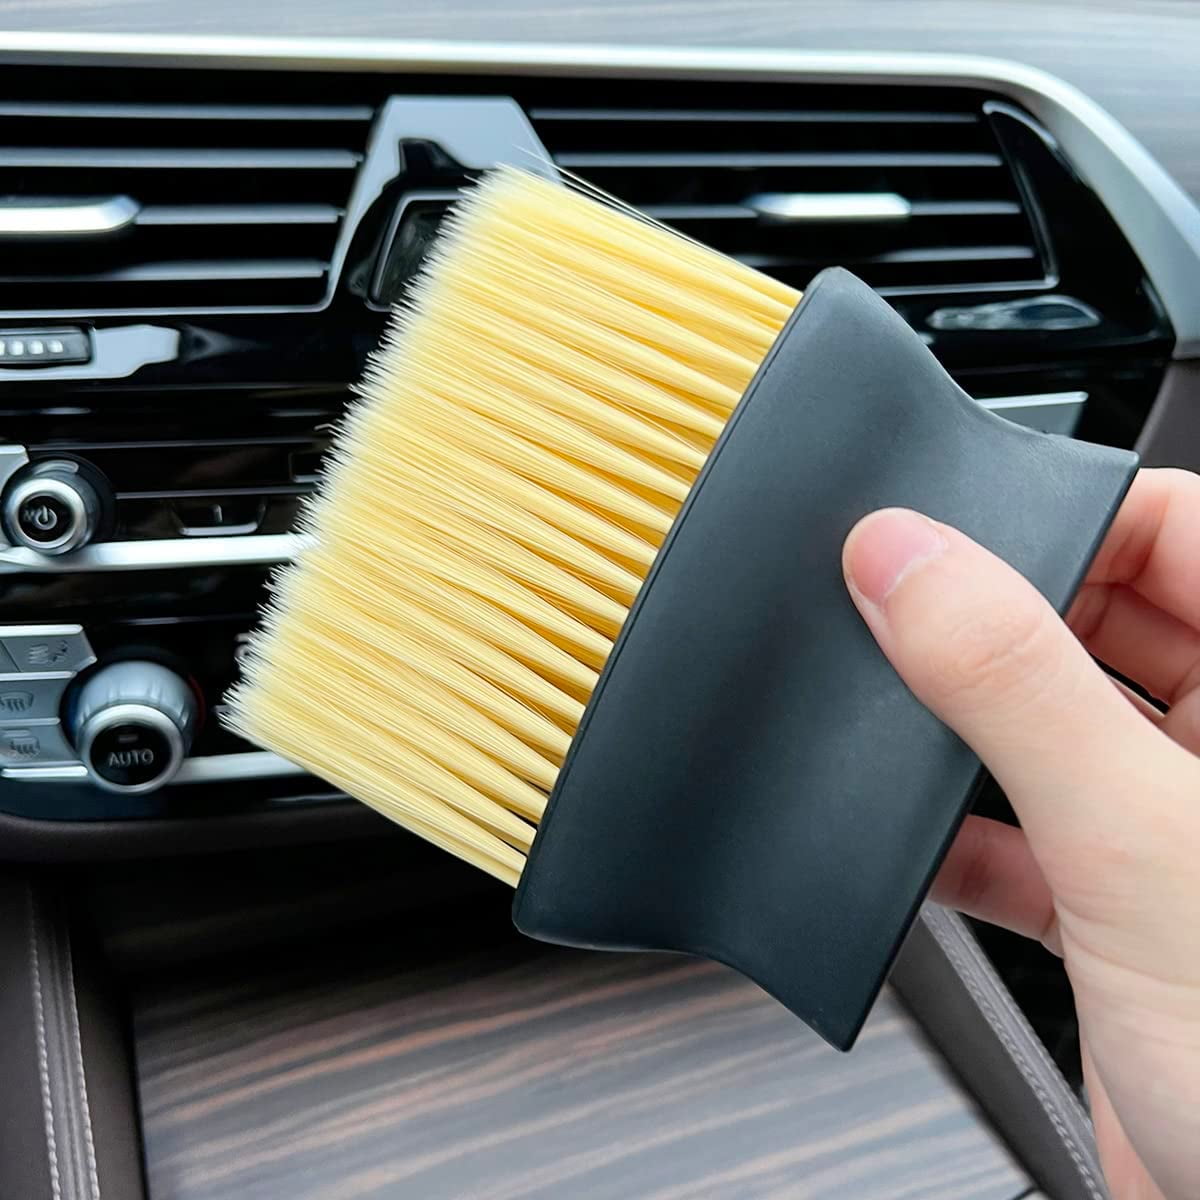 2 Pcs Double Head Brush for Car Cleaning, Portable Car Interior Detailing  Brush Car Dust Brush, Auto Detail Brush Exterior Soft Bristles Car Seat